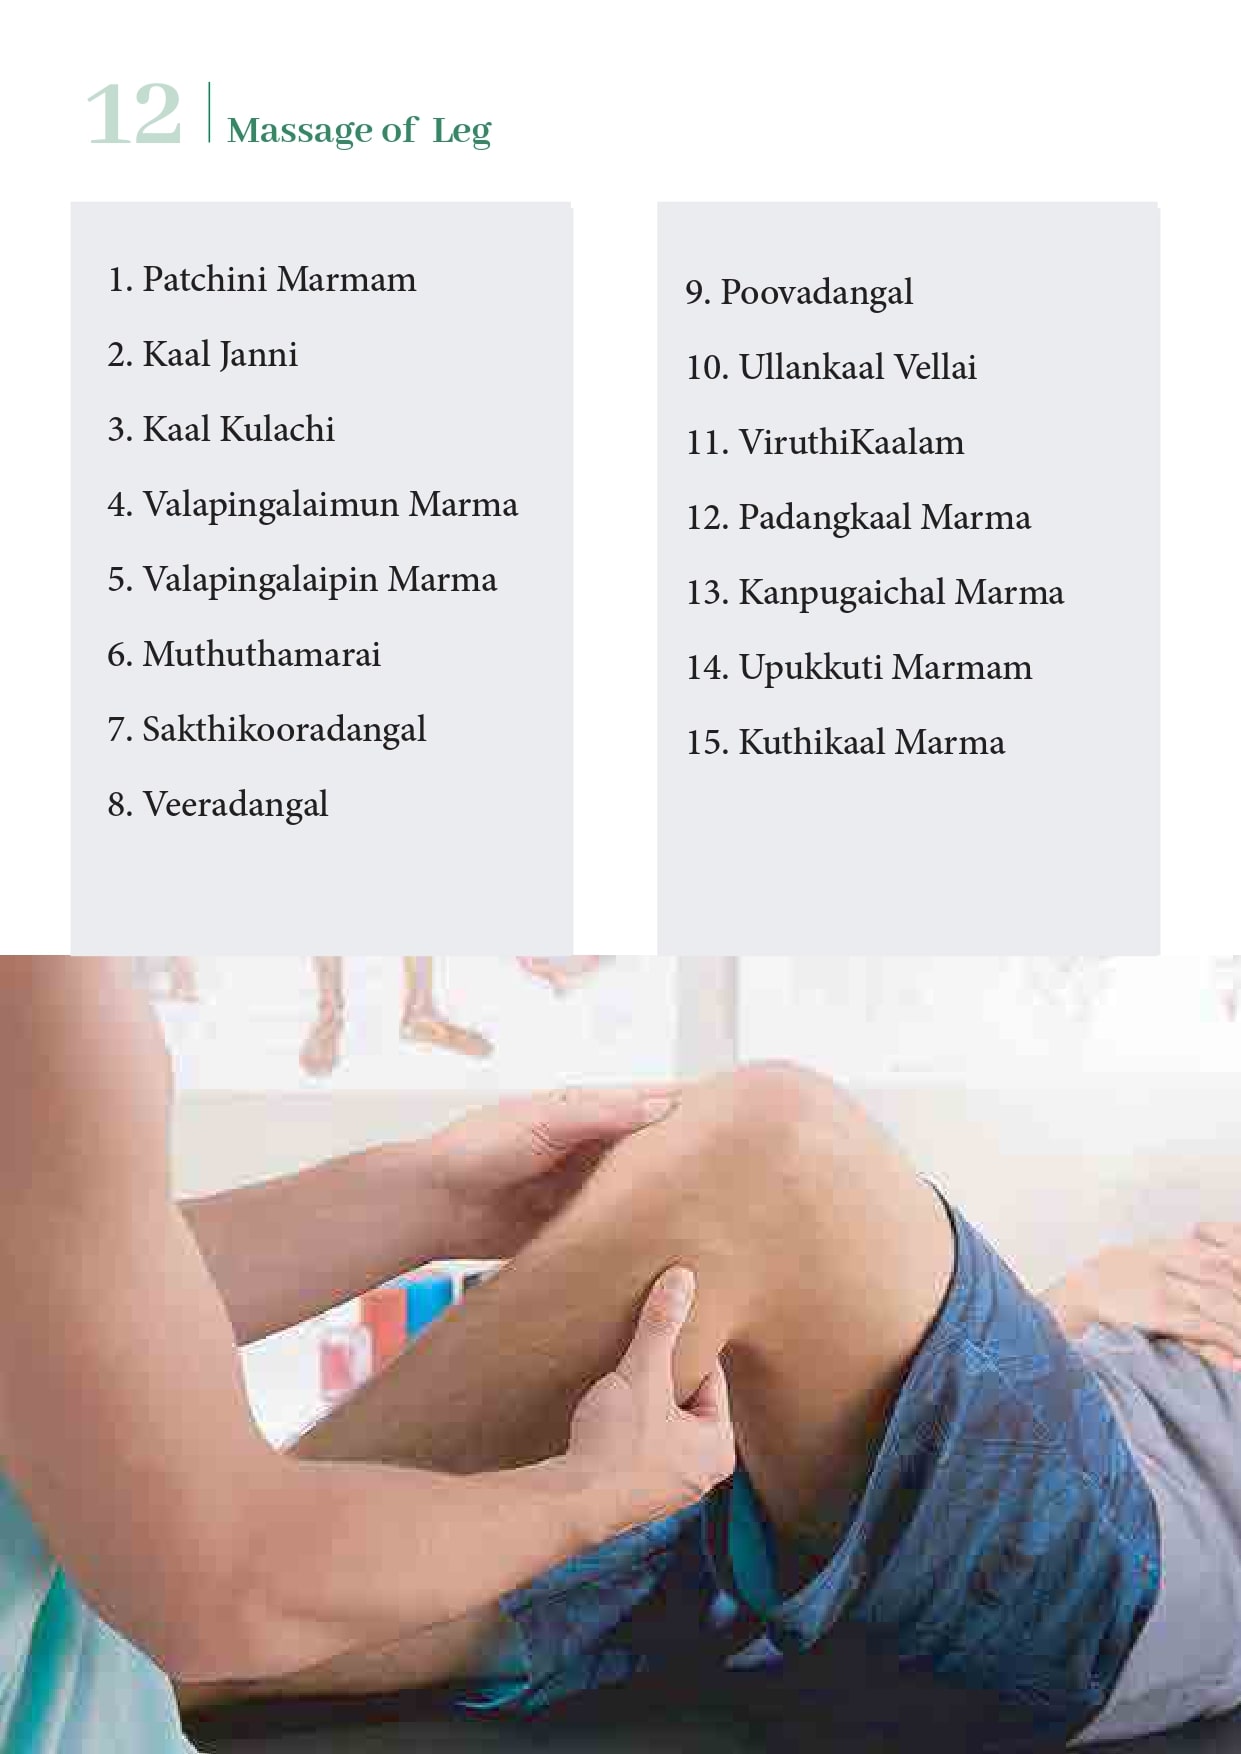 Best anti aging treatments in Kerala, India